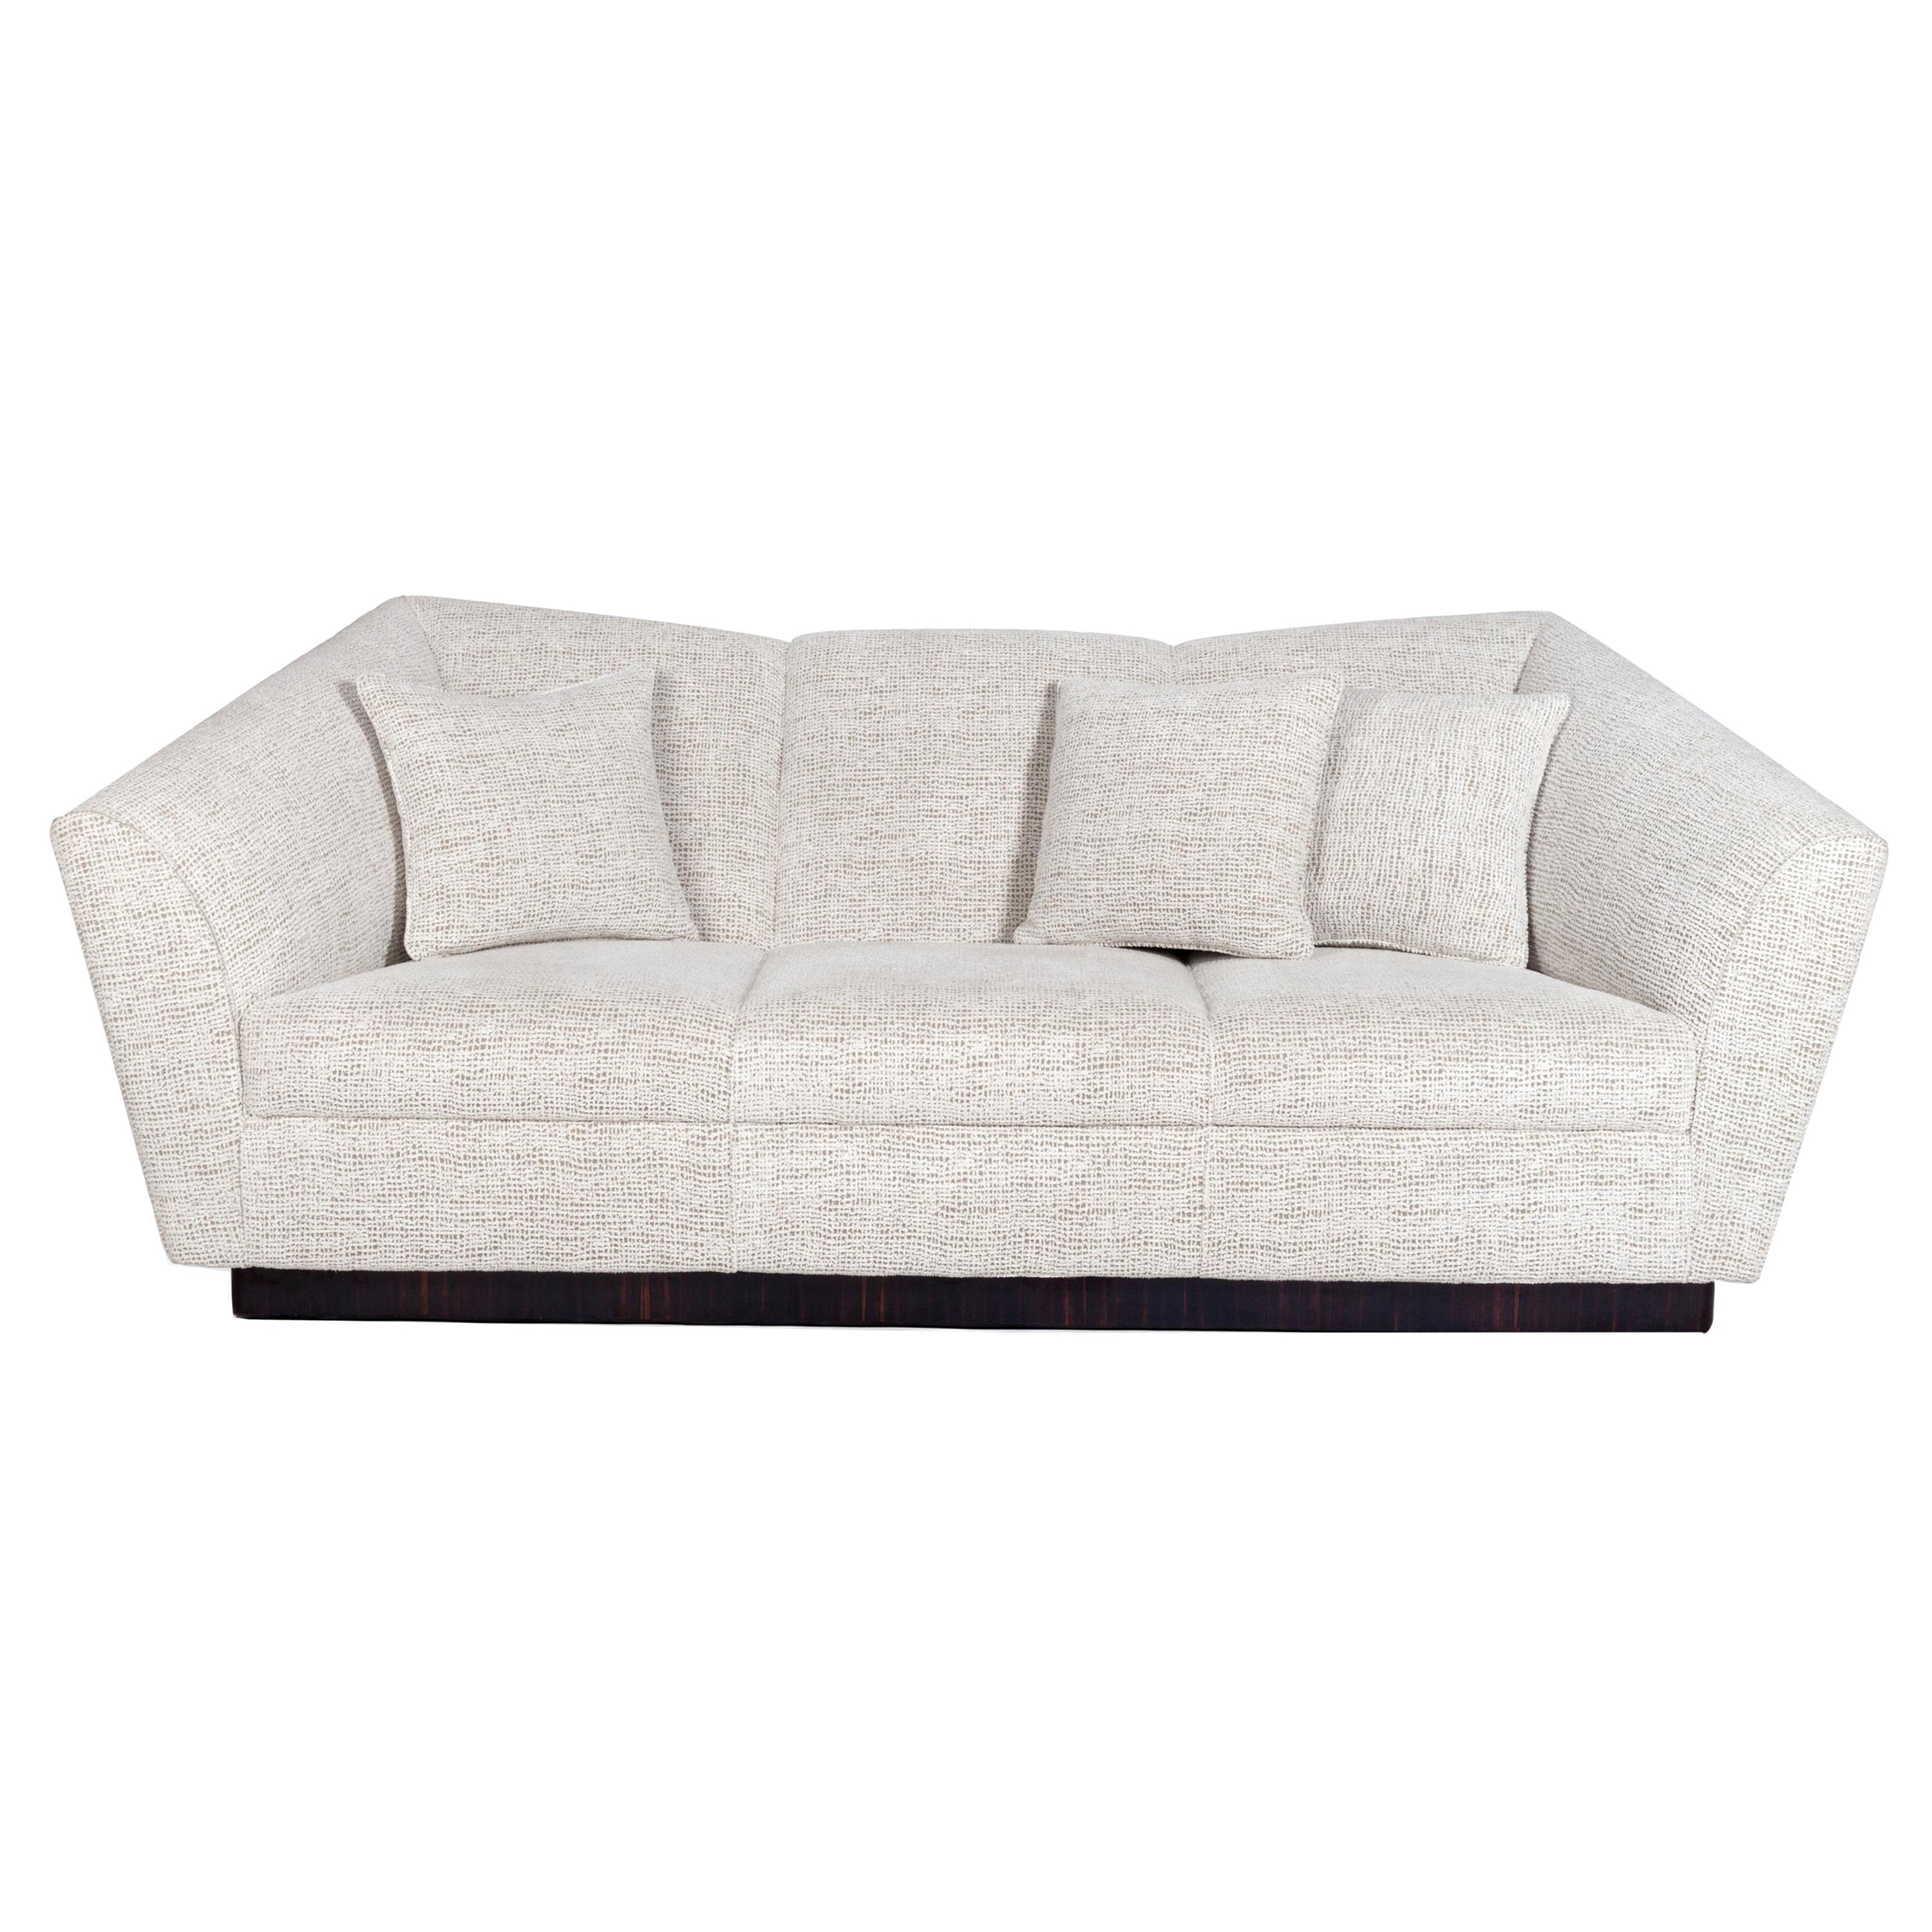 Eagle Three-Seat Sofa, Ebony & COM, InsidherLand by Joana Santos Barbosa For Sale